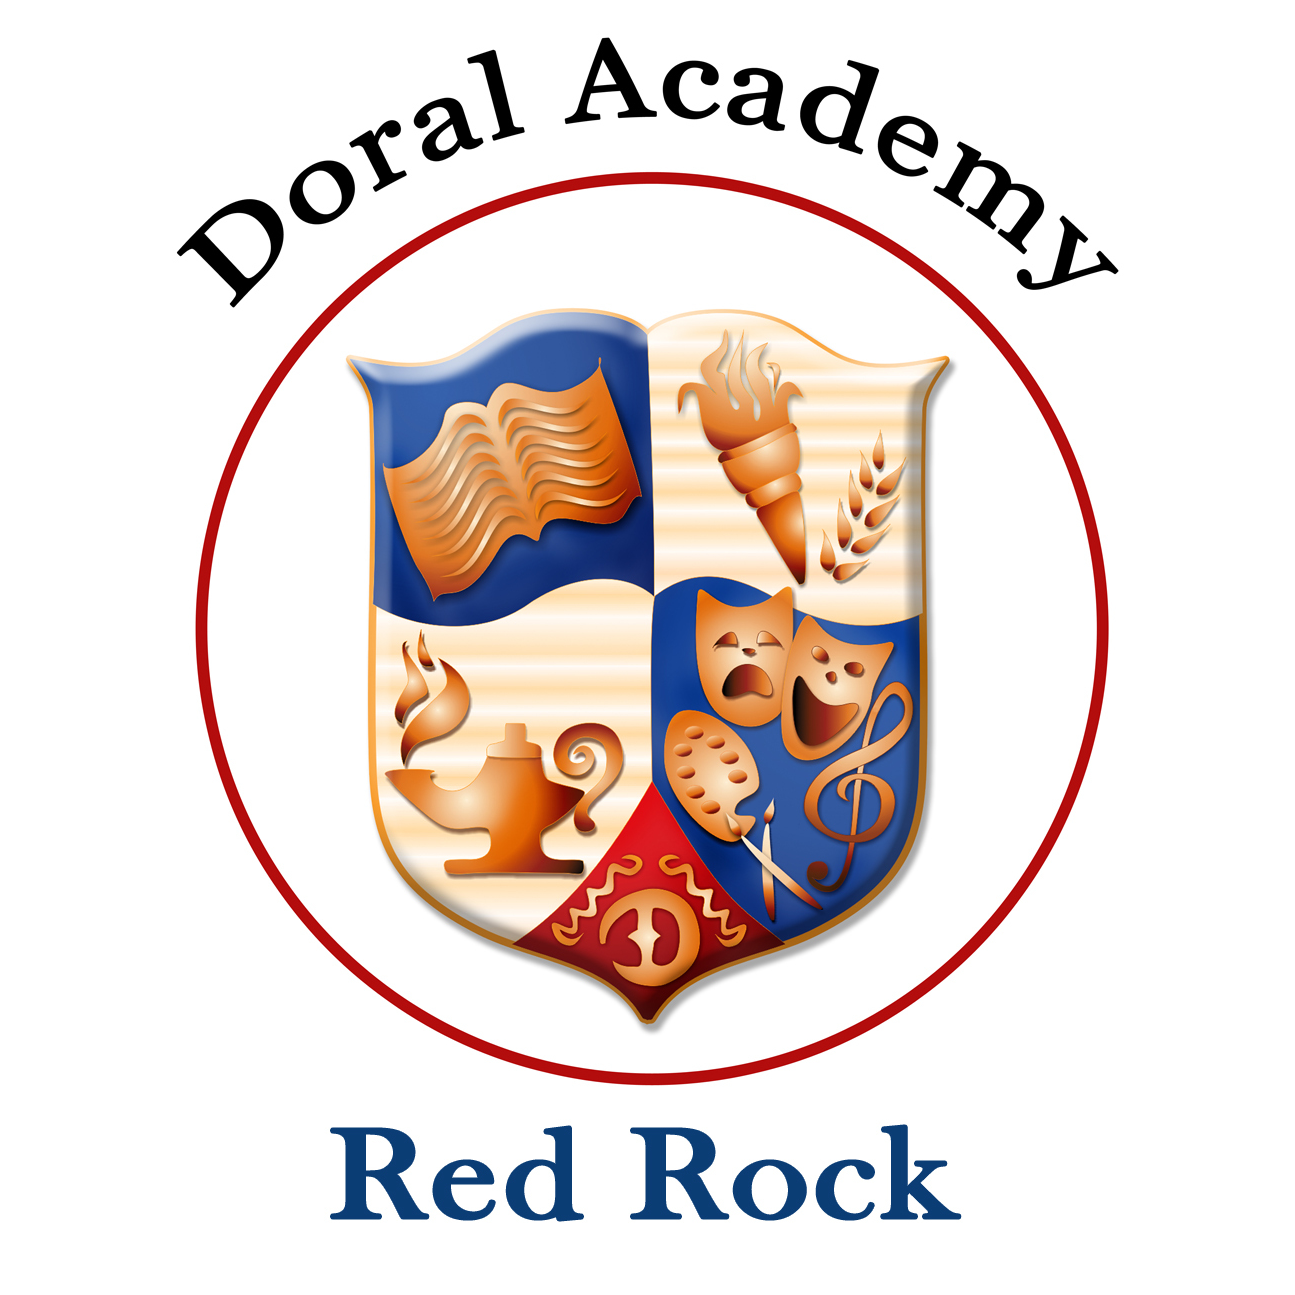 Doral Academy Red Rock